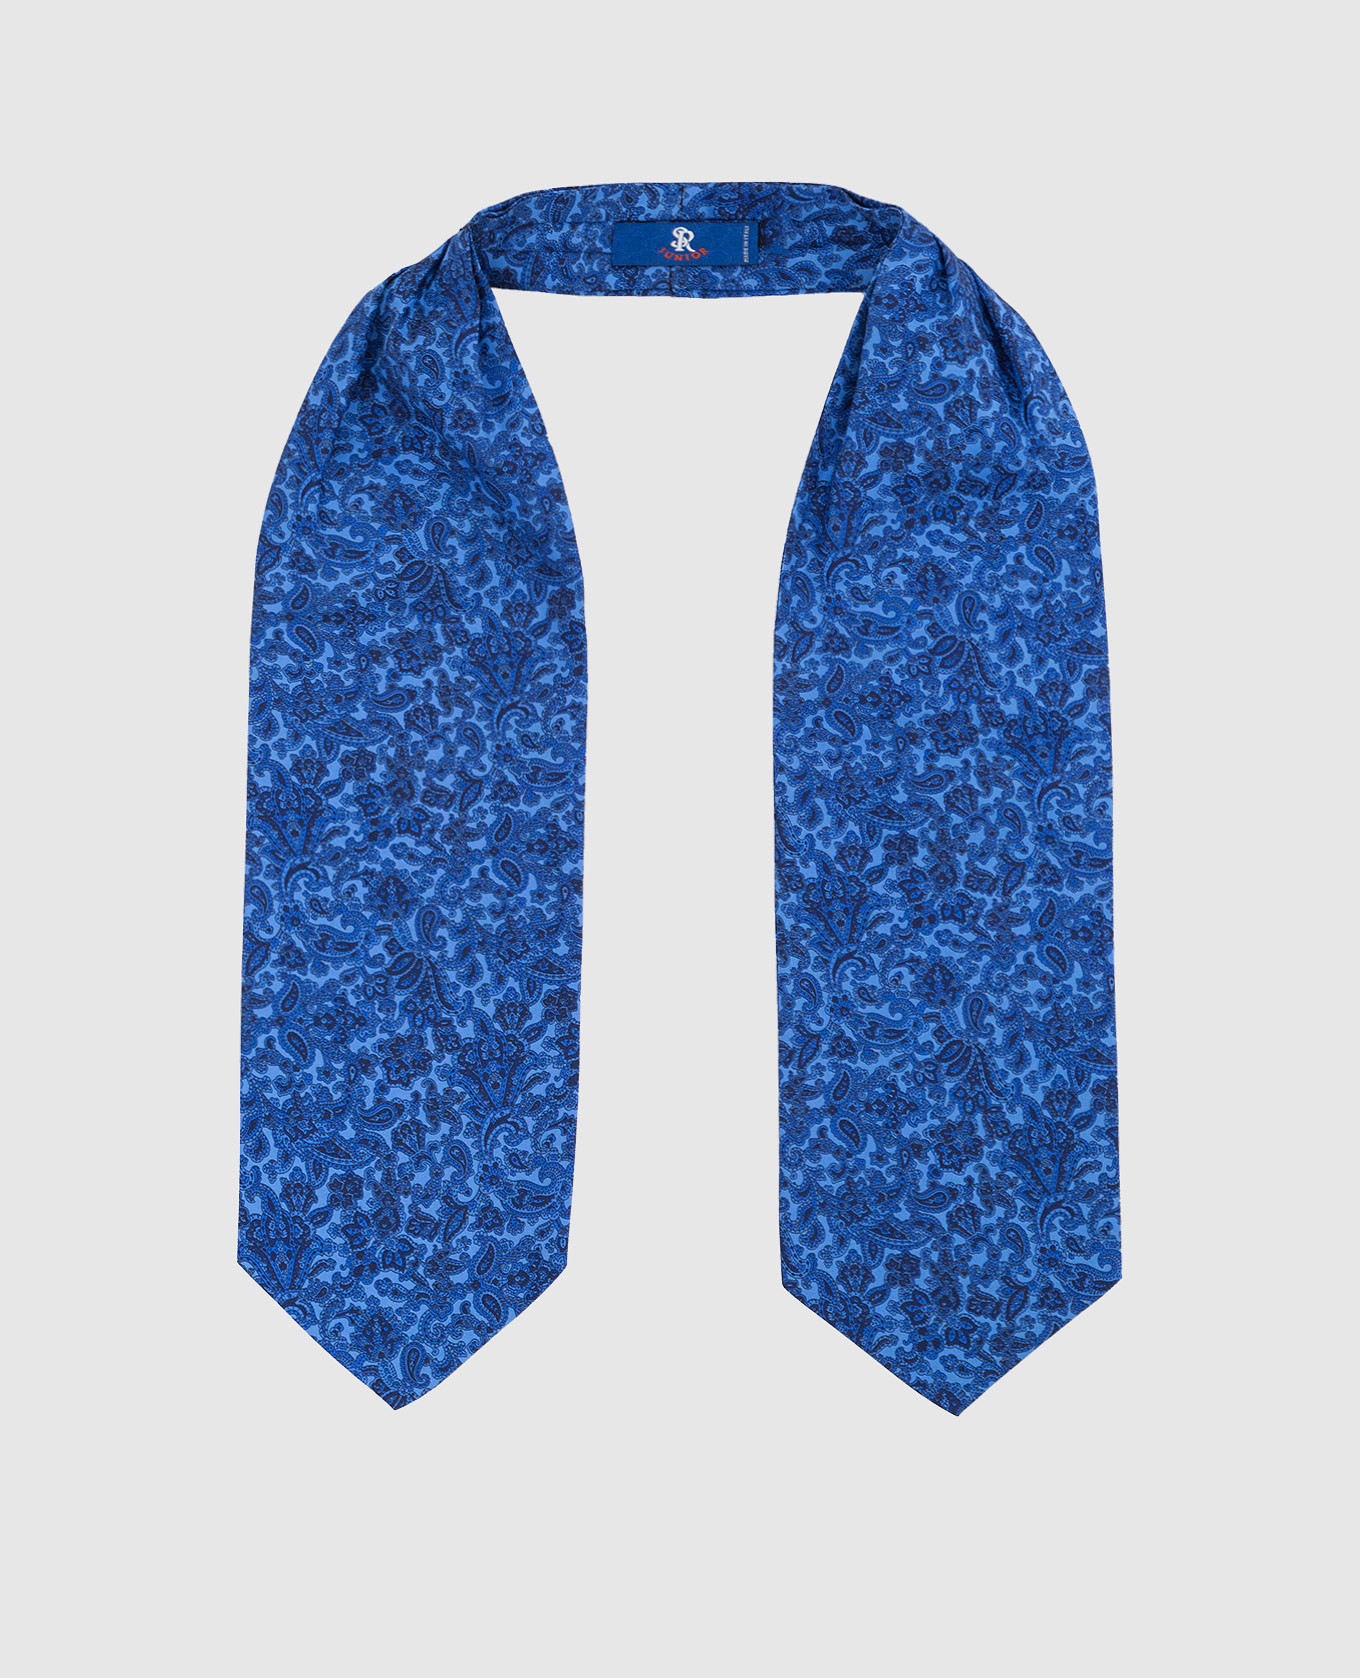 Children's blue silk ascot tie in a pattern